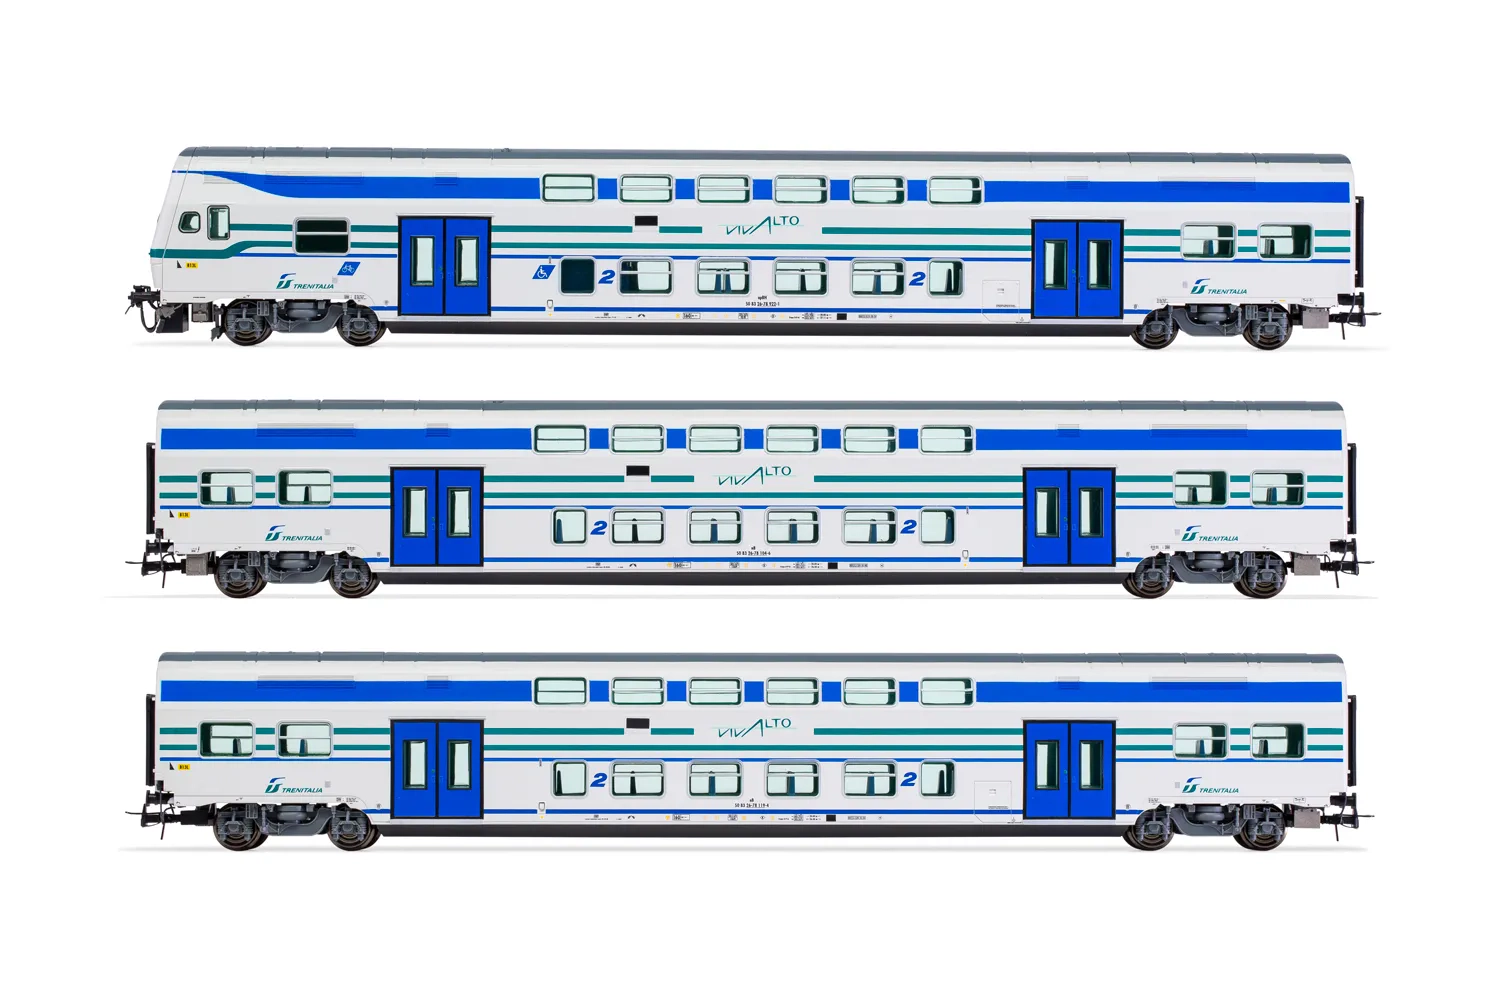 FS Trenitalia, set di 3 carrozze Vivalto, livrea "Vivalto" bianca con fasce verde/blu, composto da carrozza pilota e 2 carrozze intermedie, ep. VI